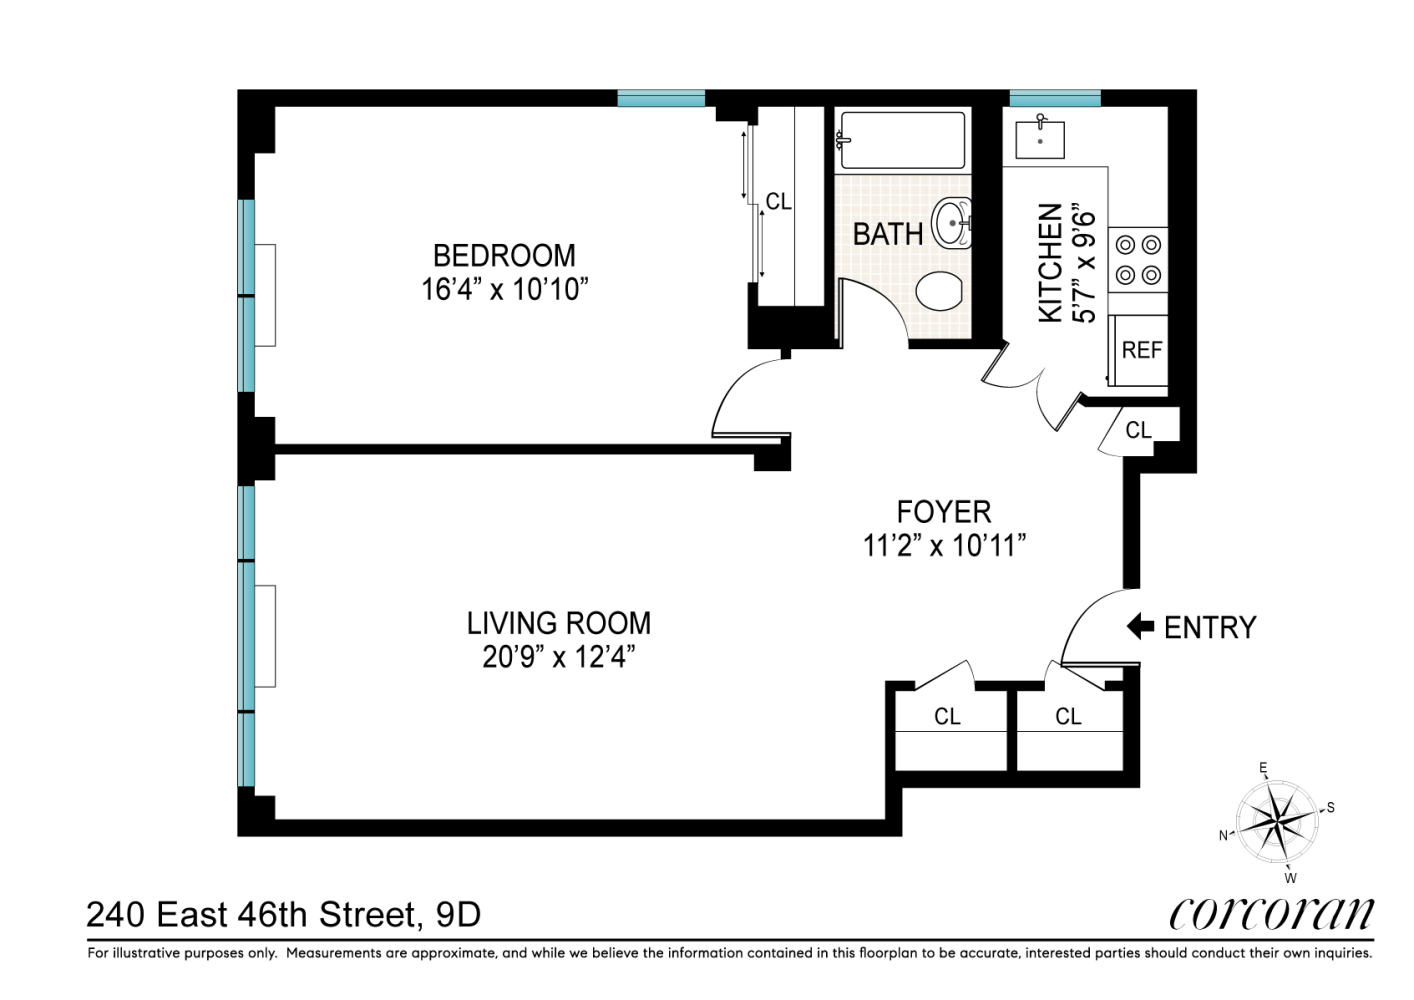 Floorplan for 240 East 46th Street, 9D